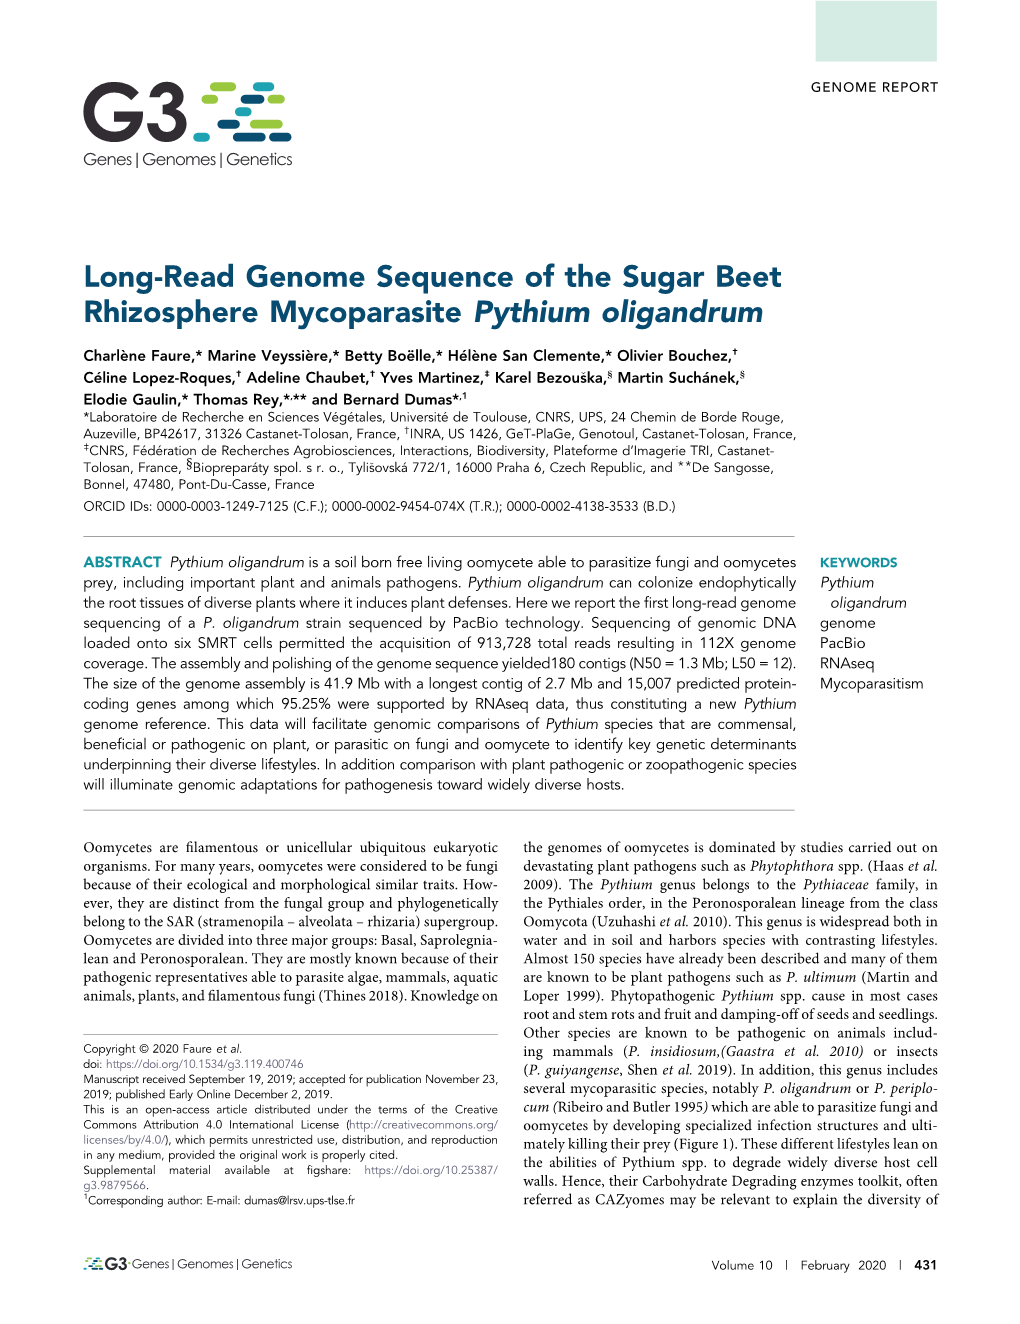 Long-Read Genome Sequence of the Sugar Beet Rhizosphere Mycoparasite Pythium Oligandrum